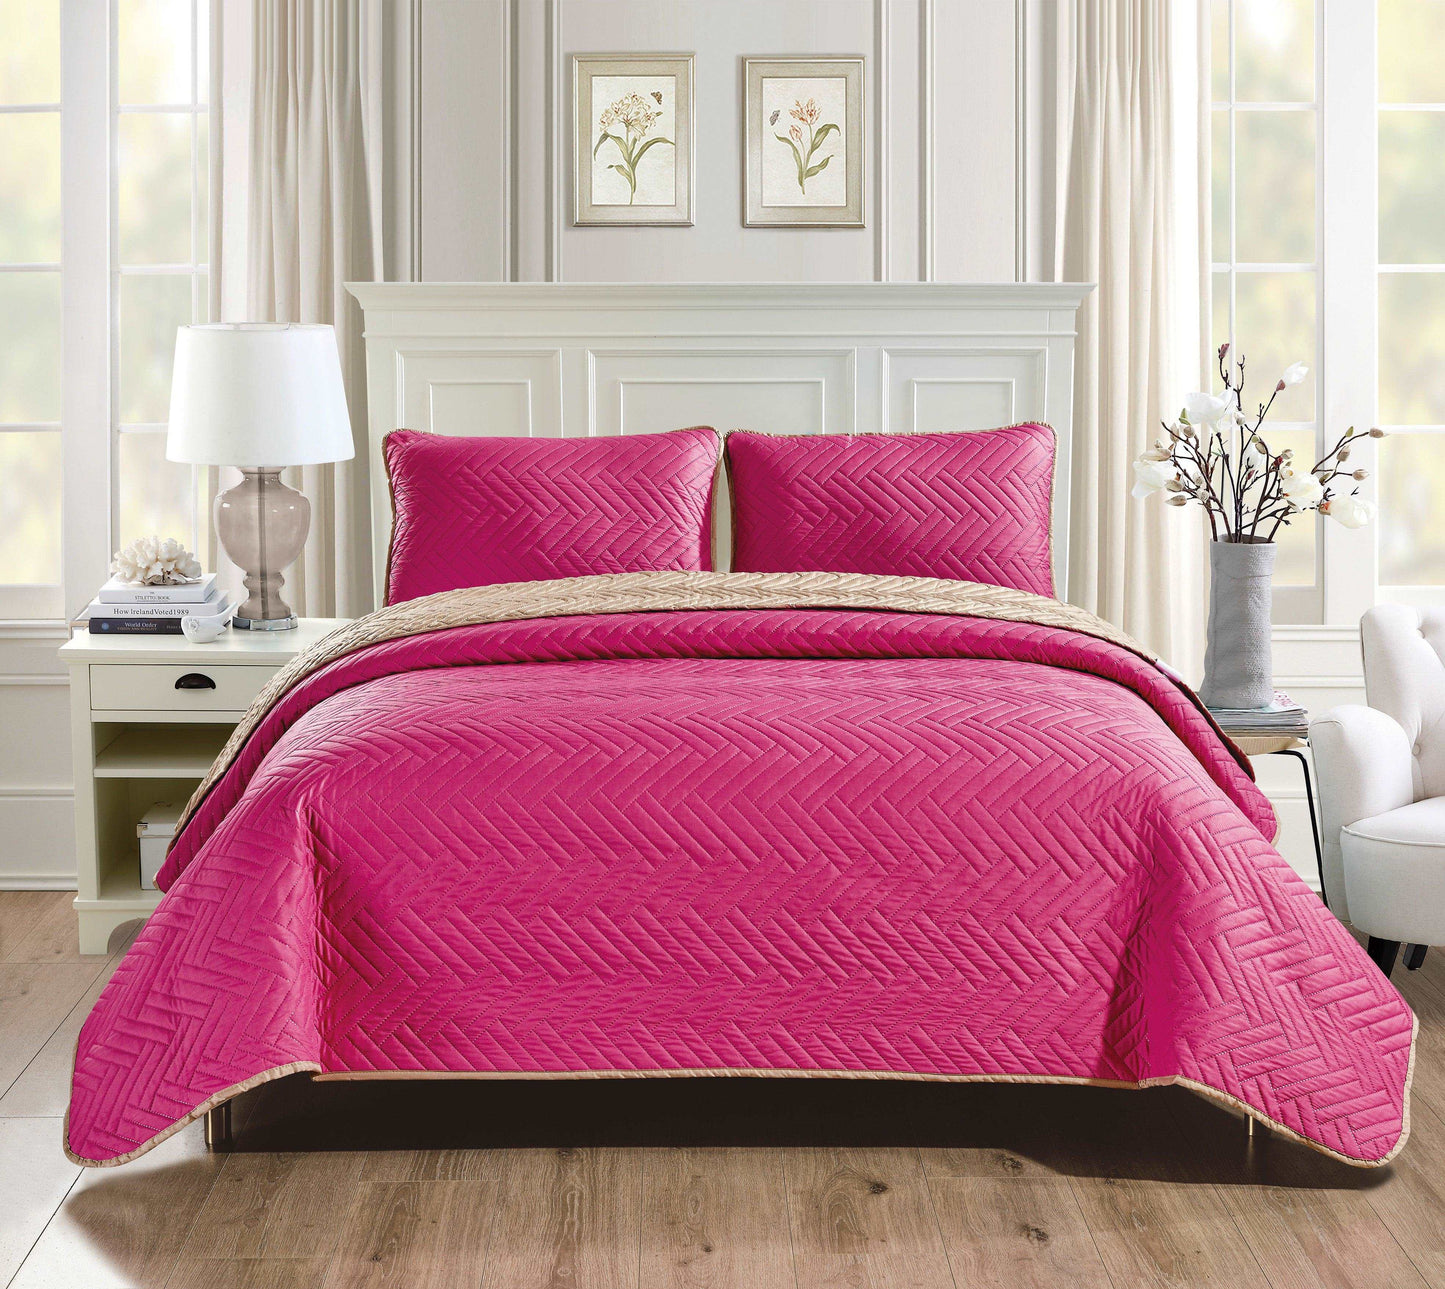 Linen World Pink/Tan / King “Sutton” 3 piece reversible quilt set with 2 shams